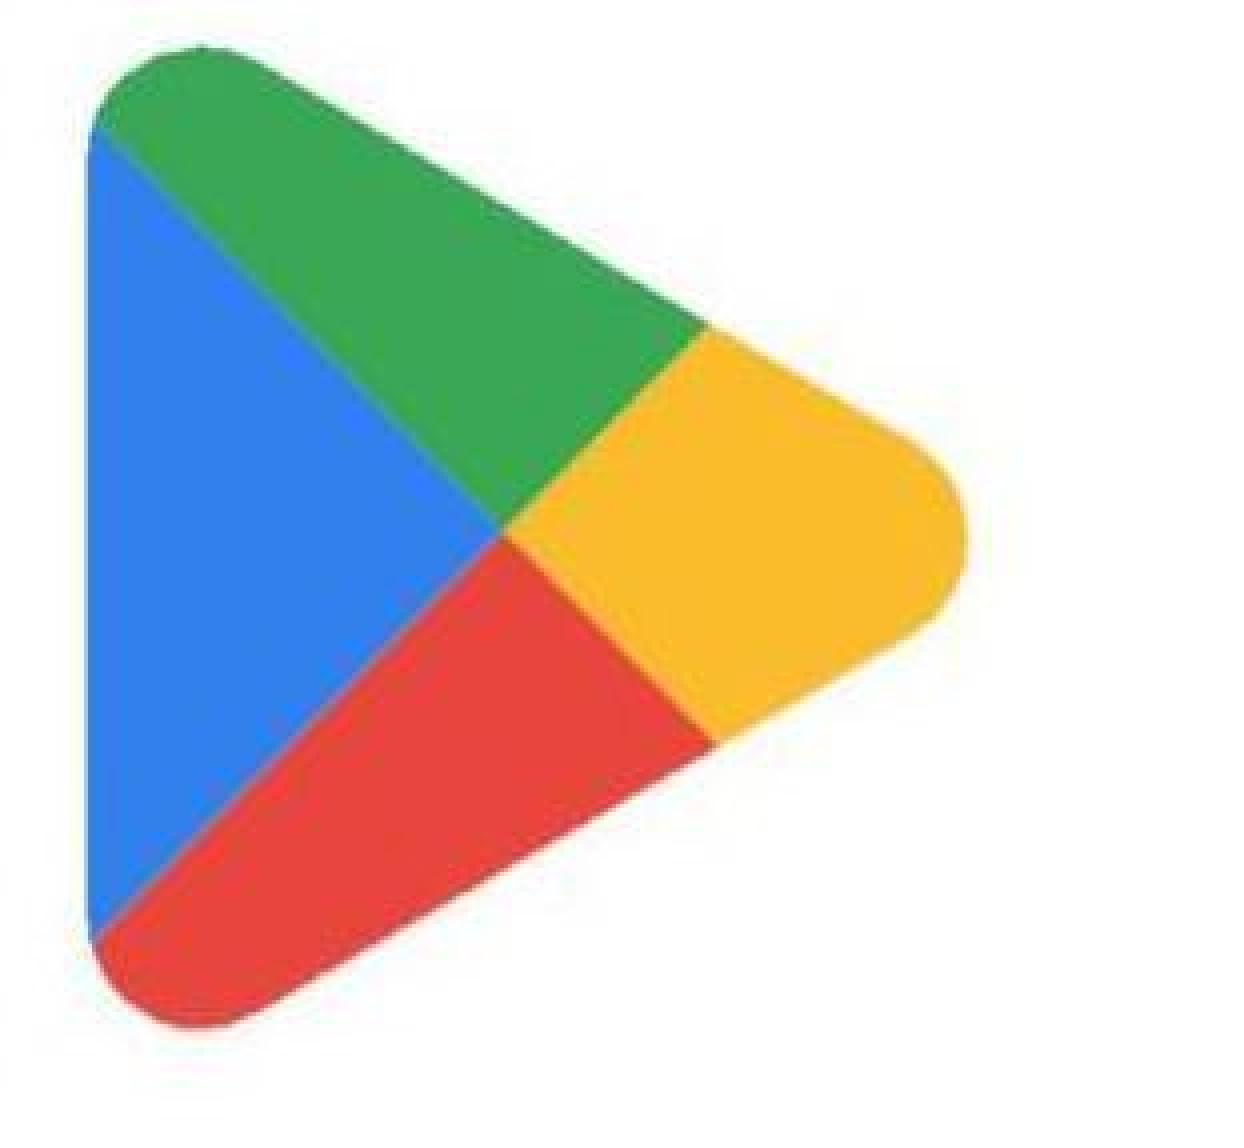 Google Play new logo